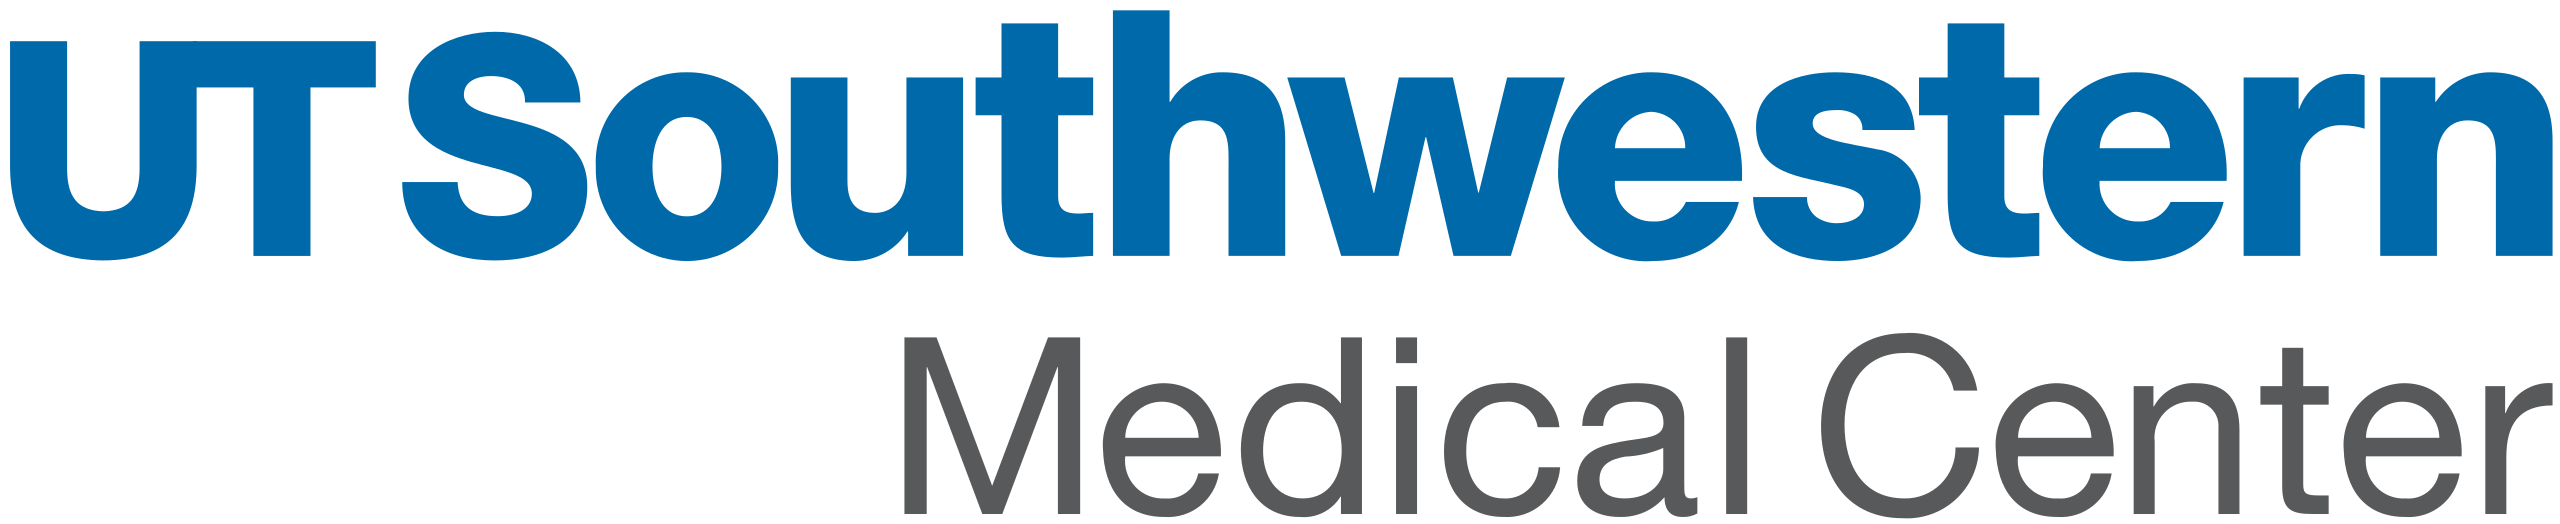 File:UT Southwestern Medical Center logo.svg - Wikipedia